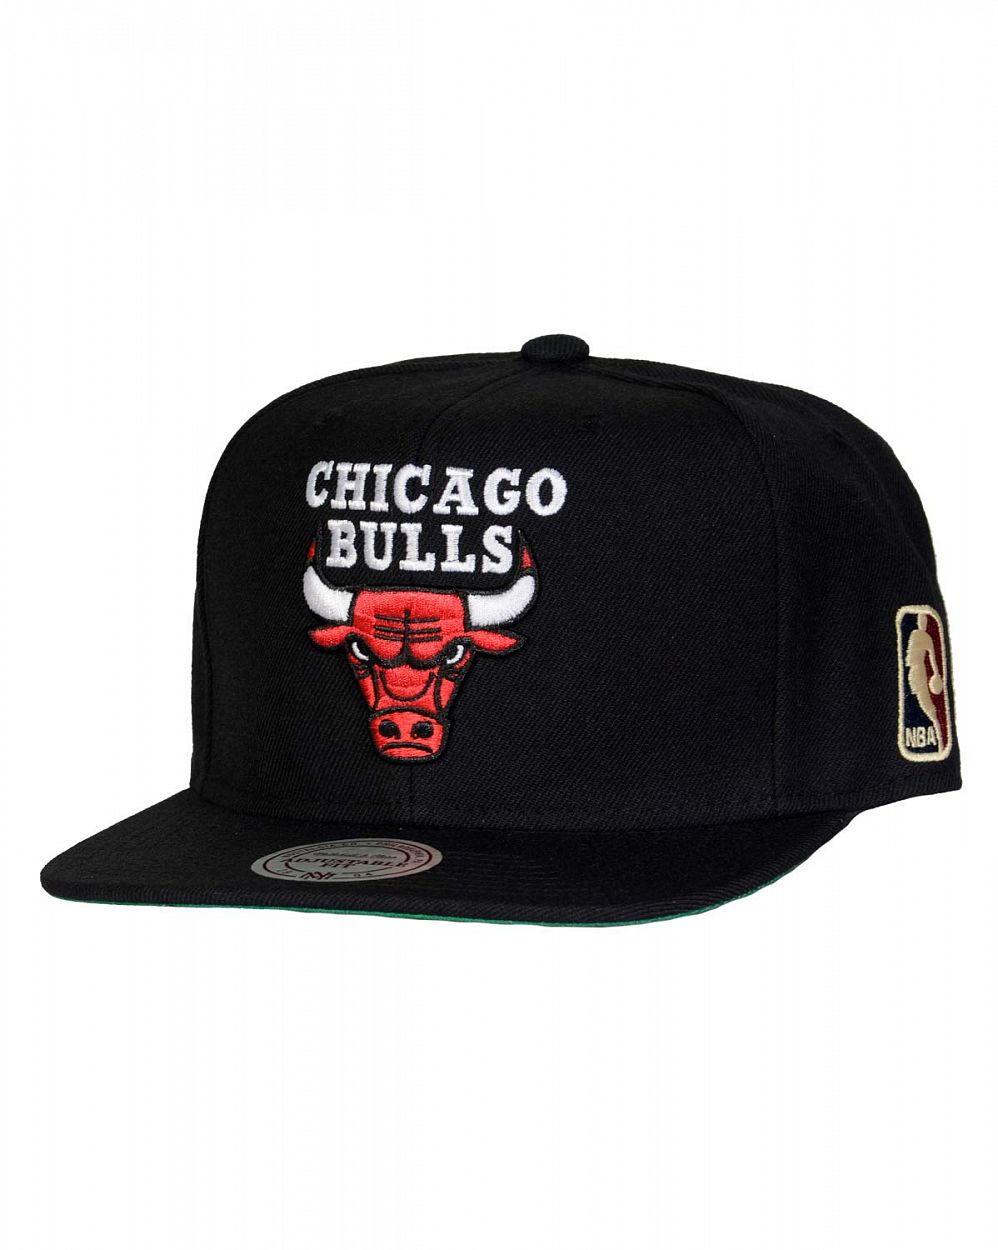 Бейсболка с прямым козырьком Mitchell and Ness WOOL SOLID 2 Chicago Bulls Black отзывы